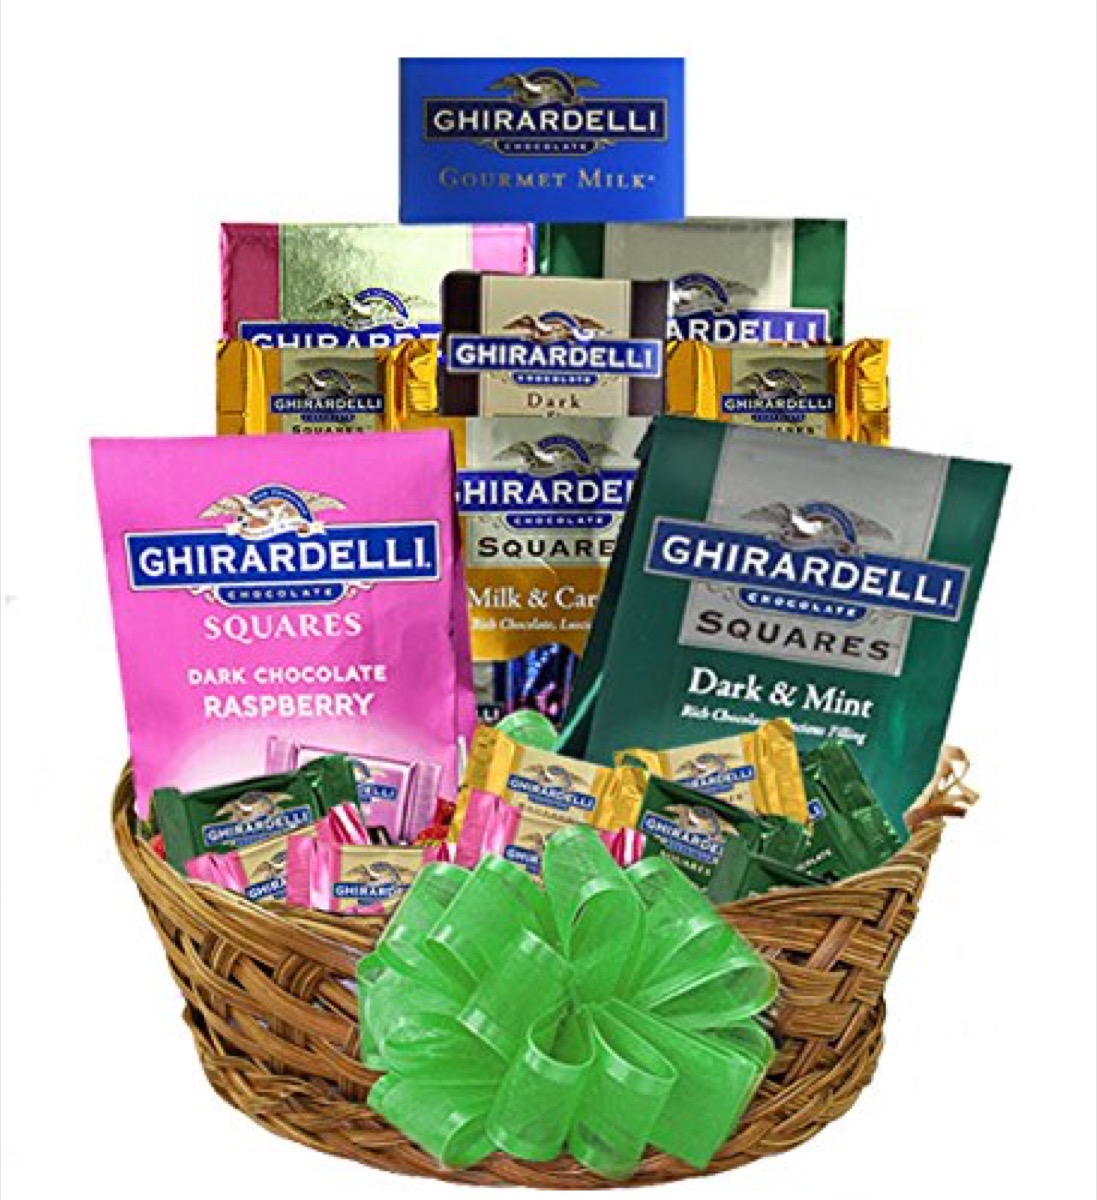 ghiradelli choclate array gift basket, best teacher gifts